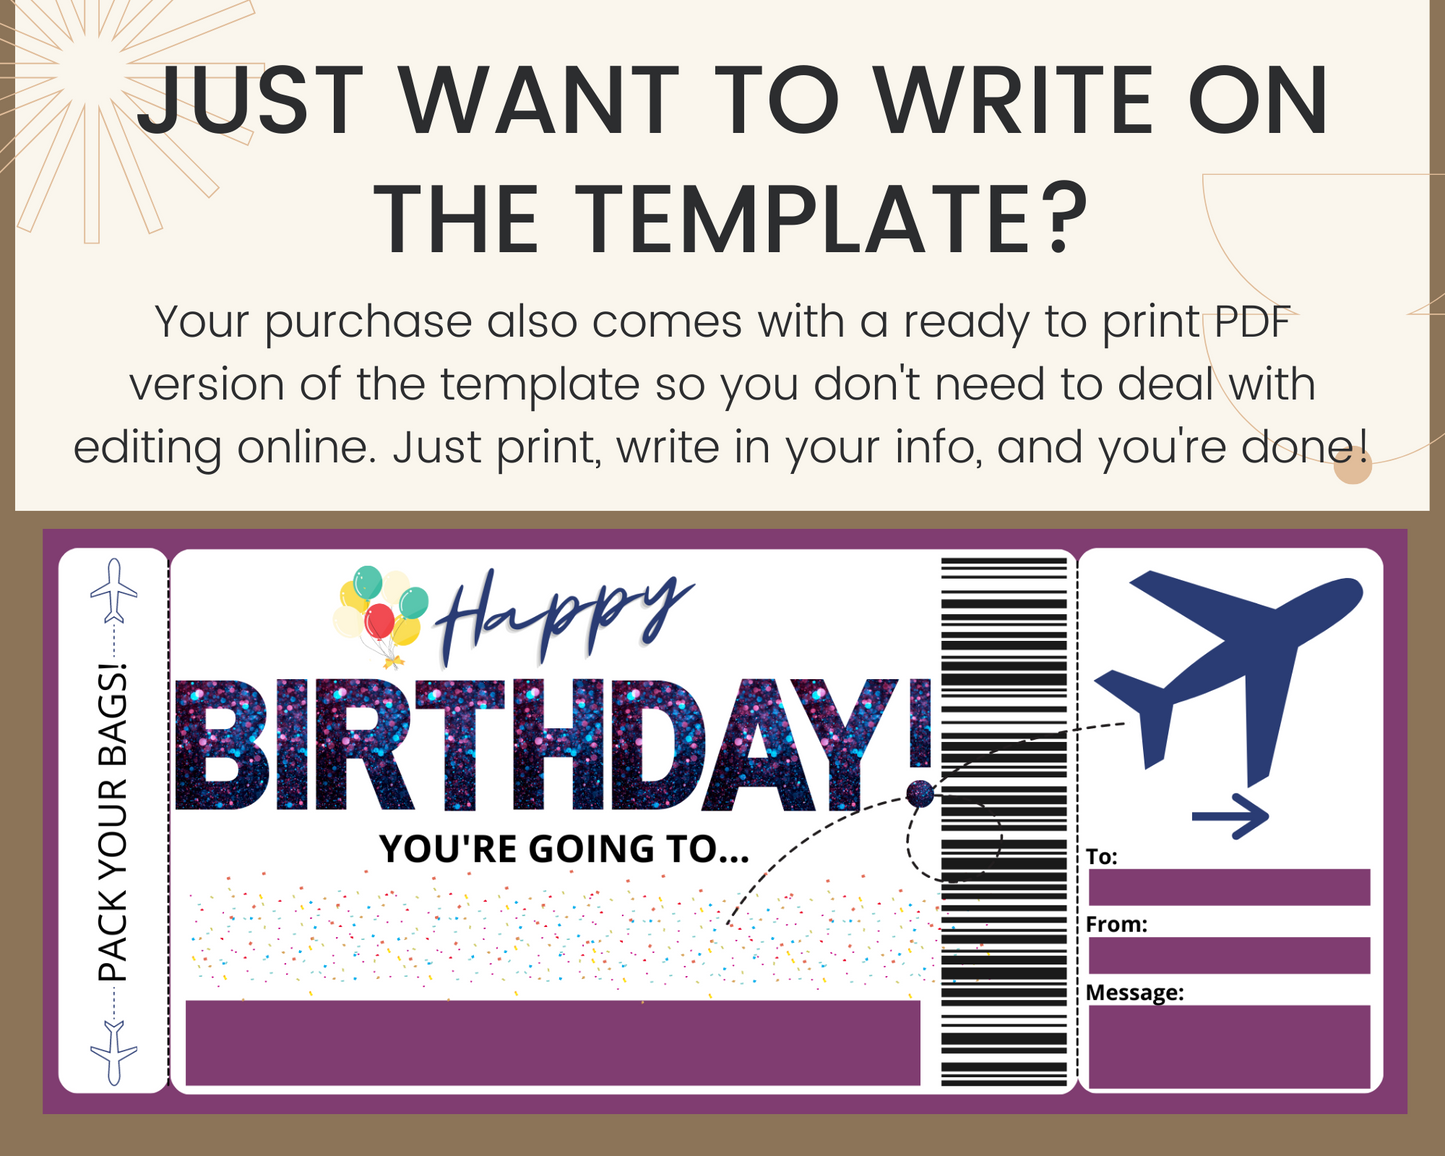 Birthday Surprise Flight Ticket Template